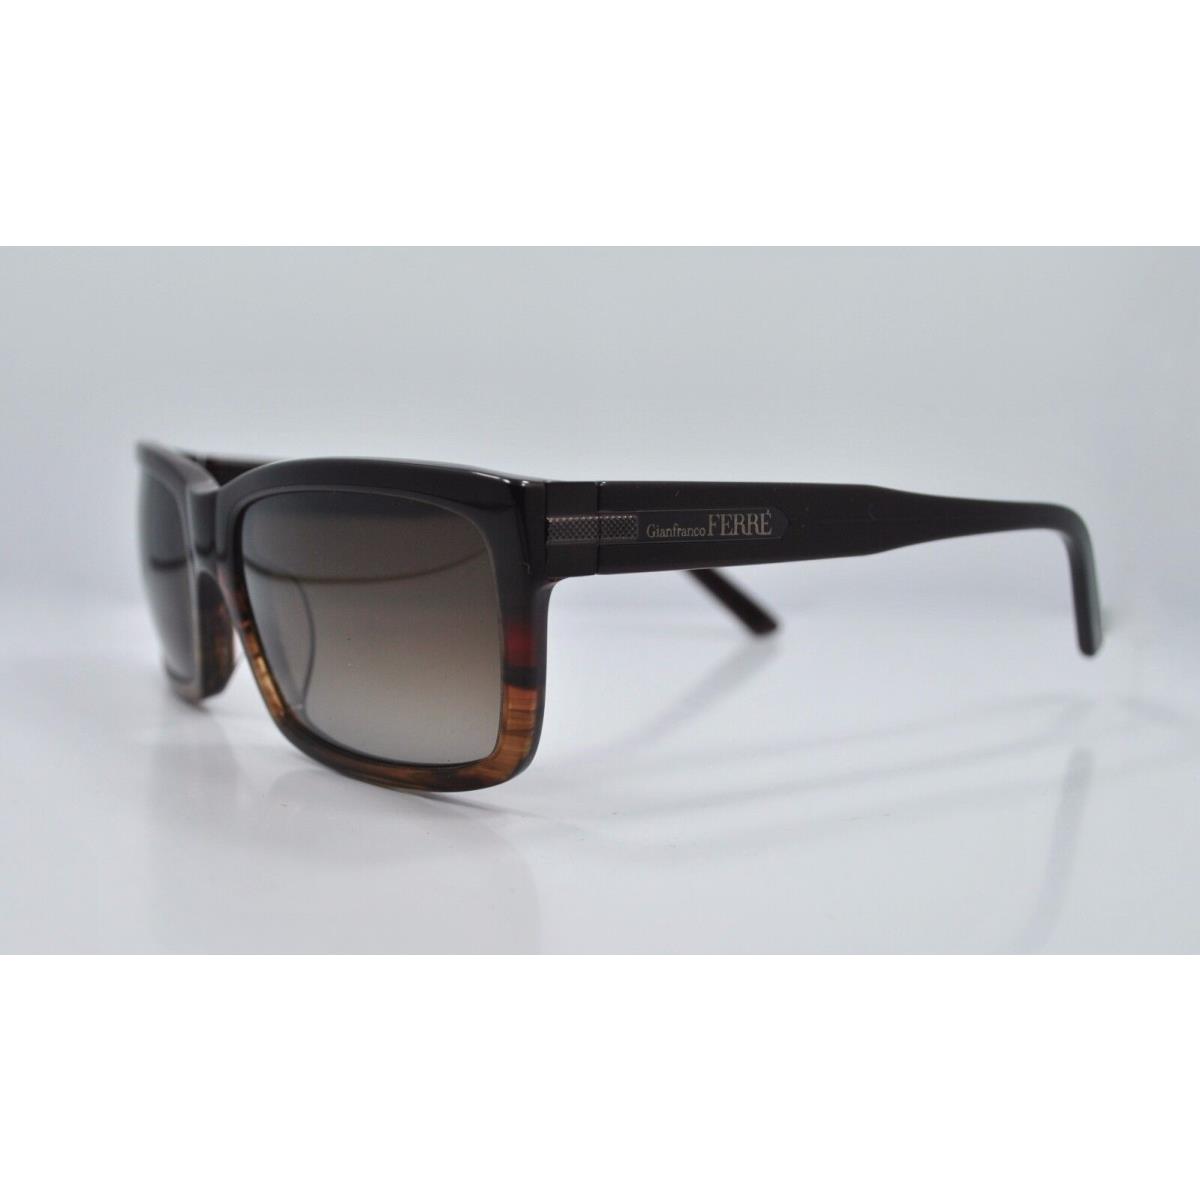 Gianfranco Ferre FG54902 BS Sunglasses Frames